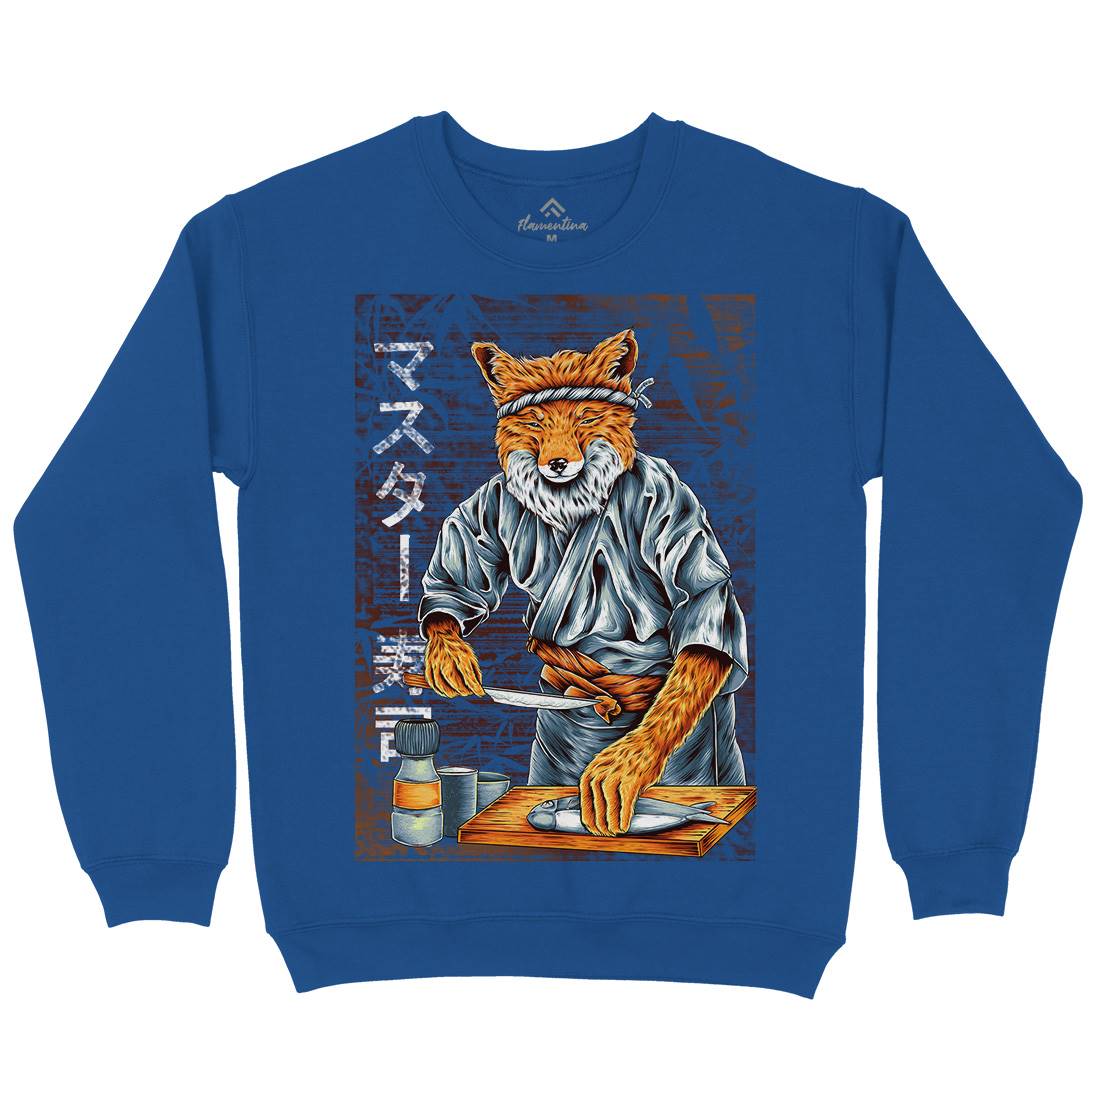 Japan Fox Kids Crew Neck Sweatshirt Asian B994